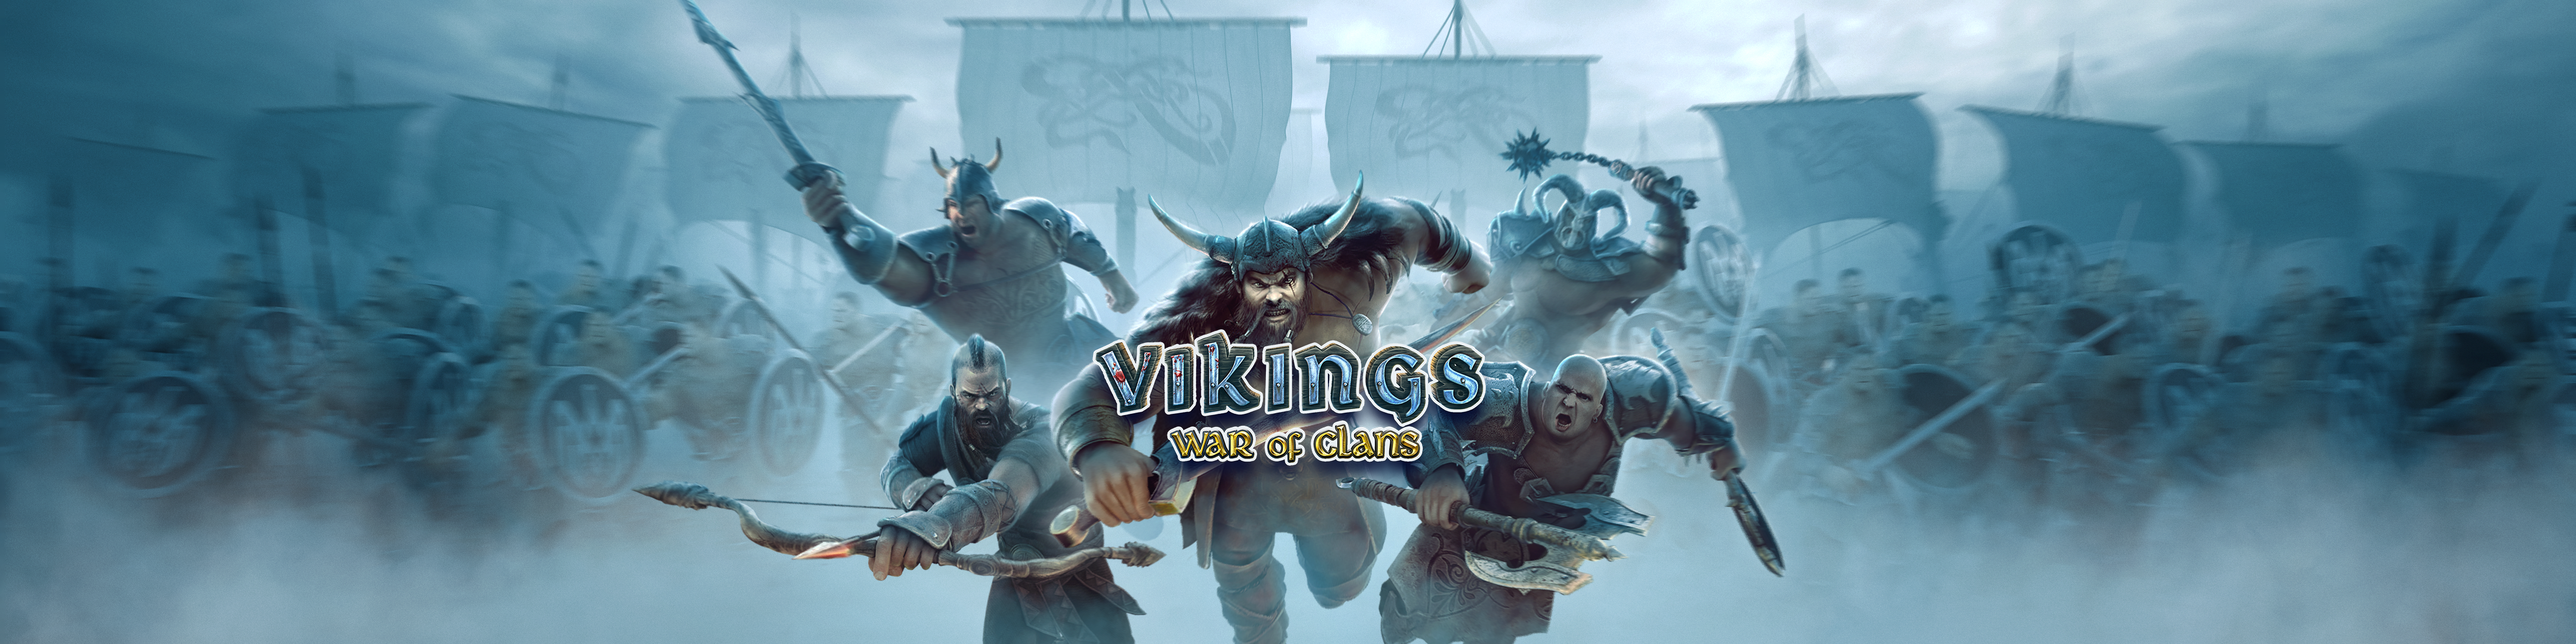 Vikings War Of Clans Revenue Download Estimates Apple App - robuxgemcom free robux